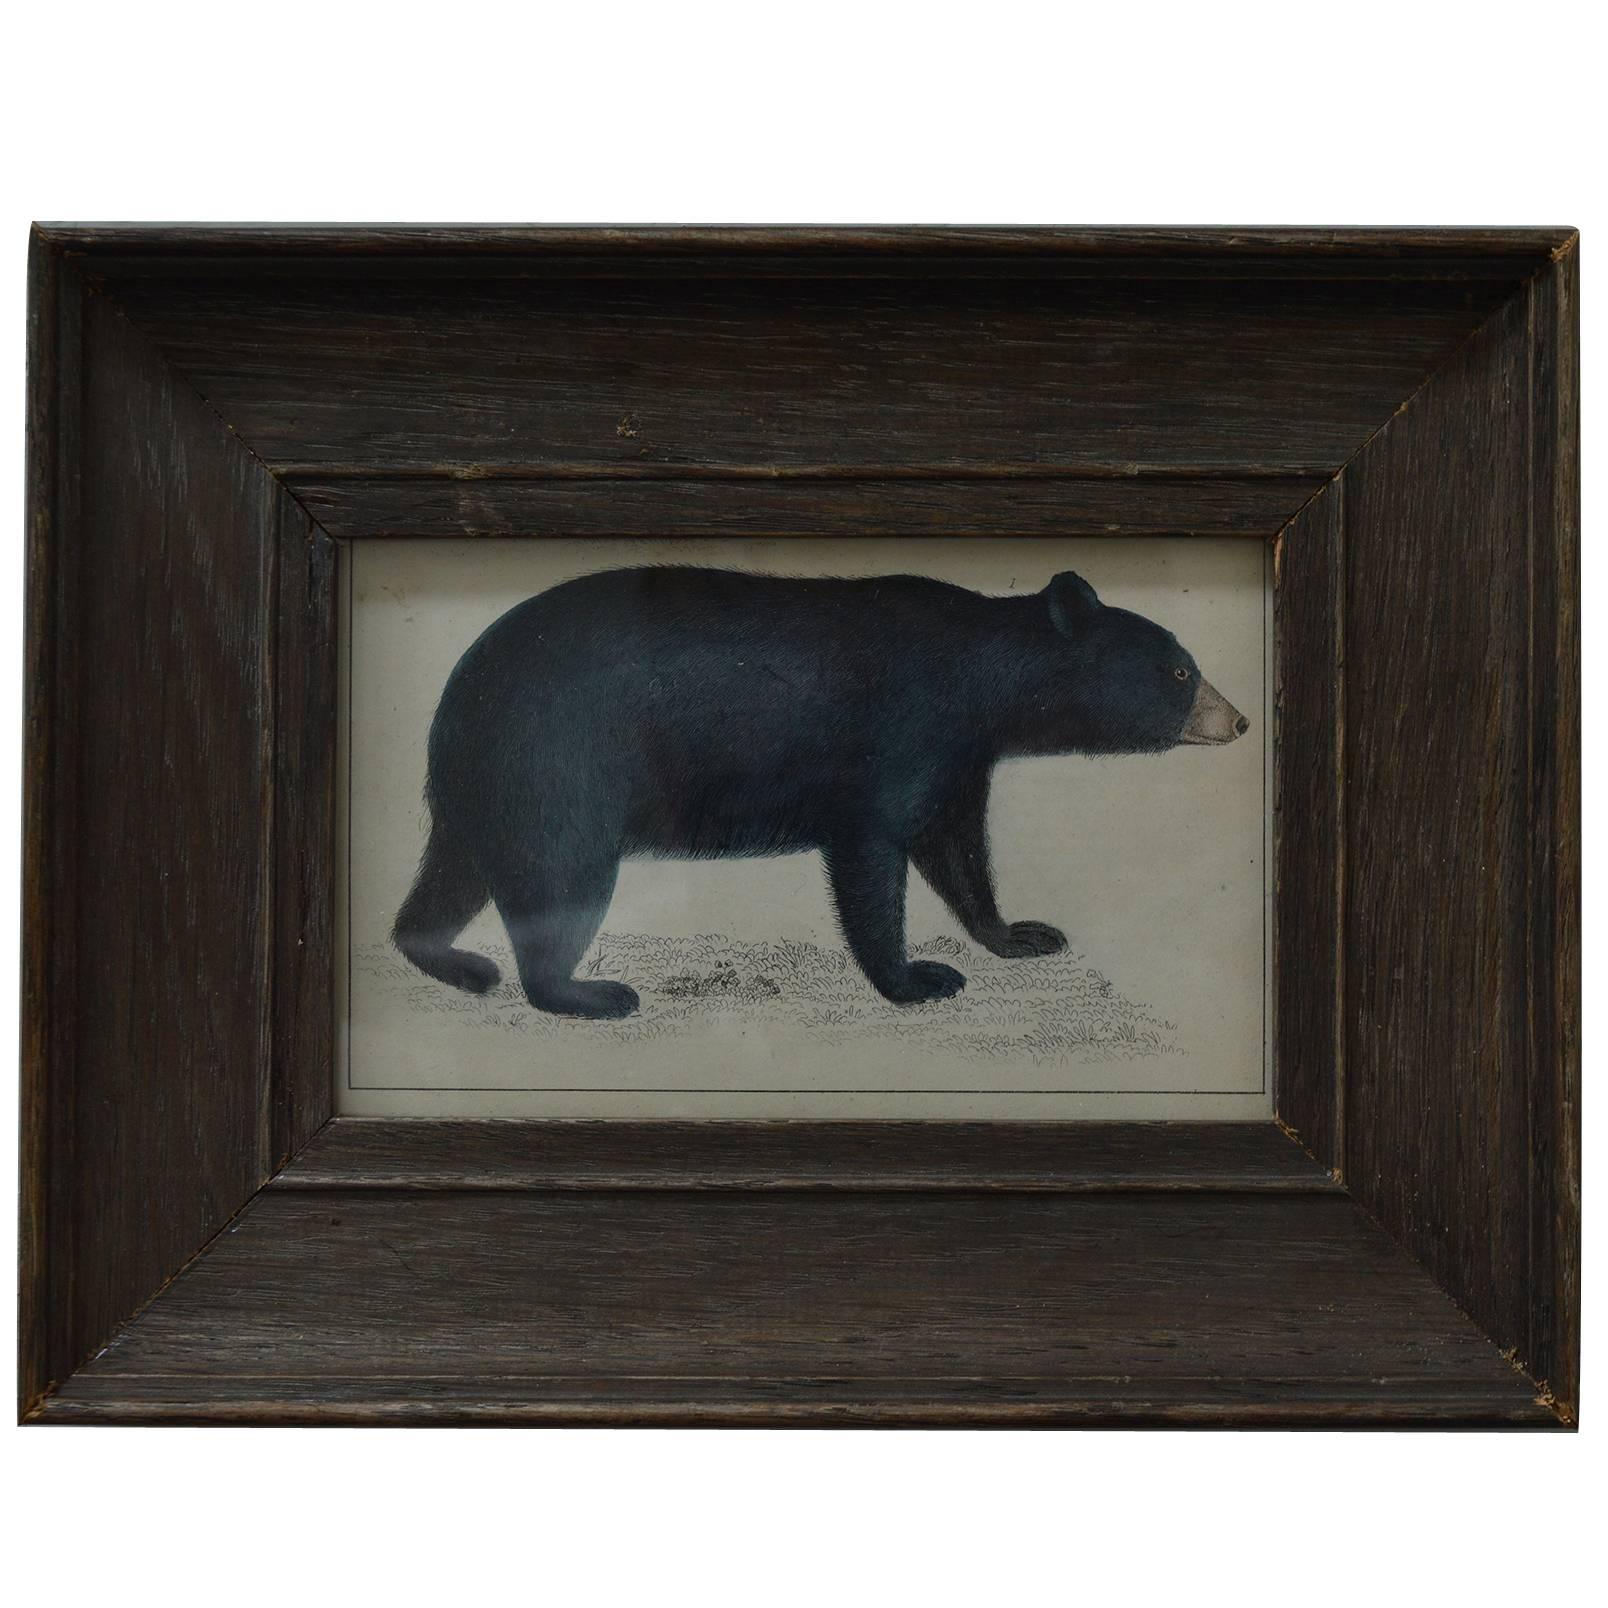 Original Antique Print of a Black Bear, English, circa 1850